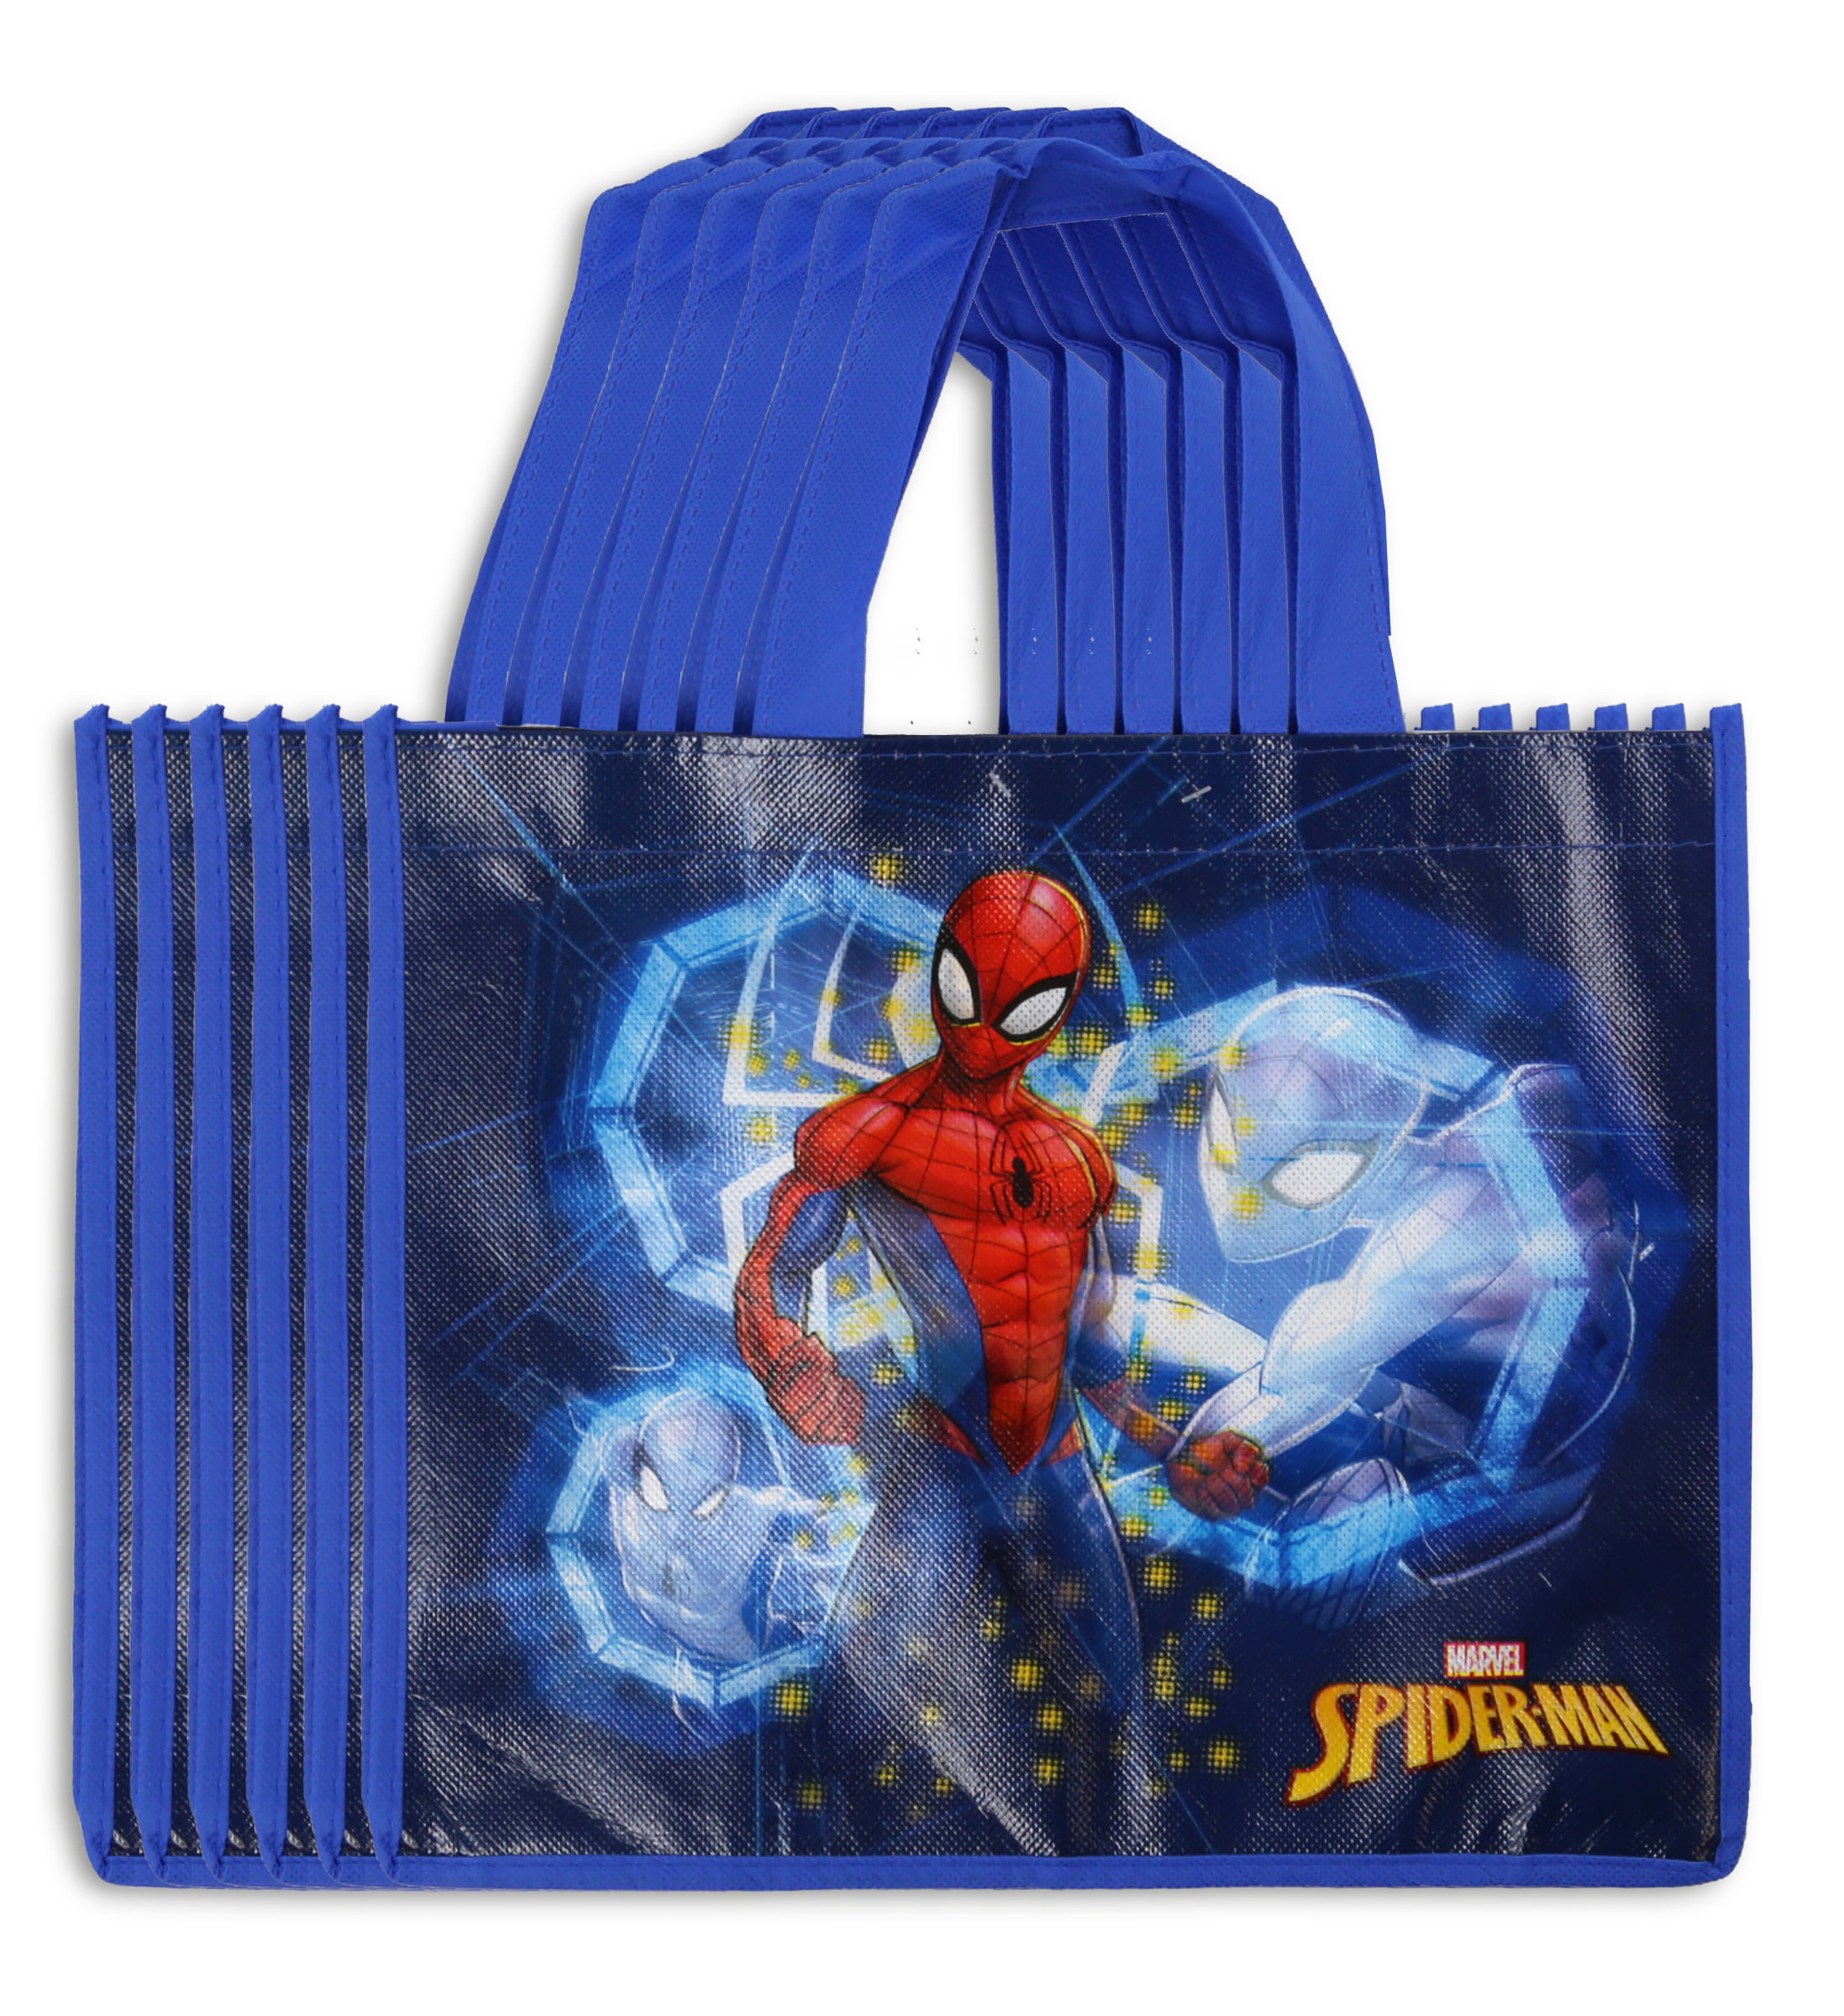 Spiderman Loot Treat Favor Bags Boy Birthday Party Supplies ~ 16 pcs Spider Man